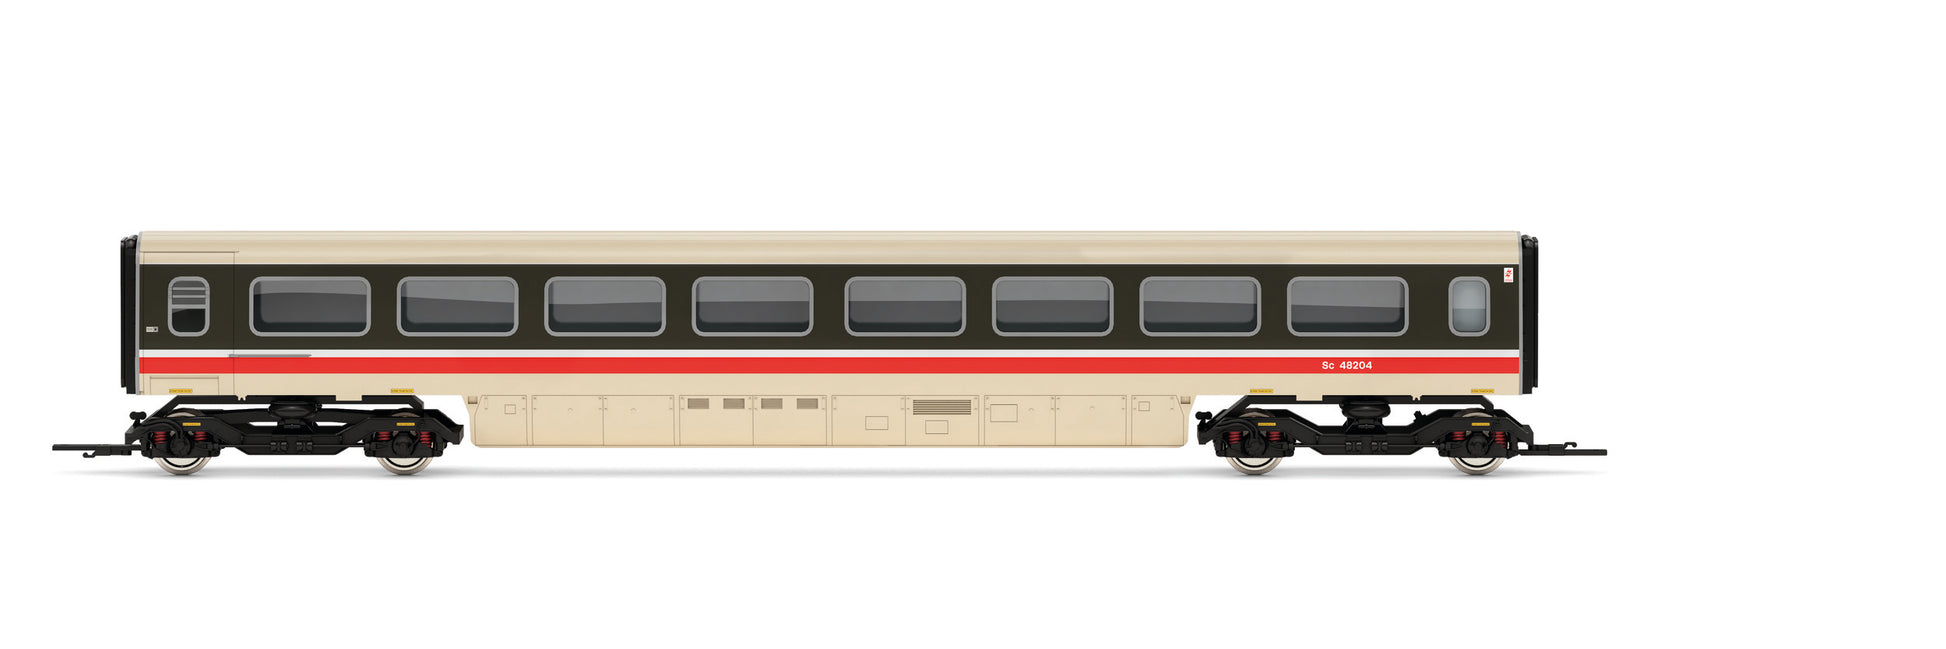 R30229 BR, Class 370 Advanced Passenger Train, Sets 370003 and 370004, 7 Car Train Pack - Era 7 - Chester Model Centre